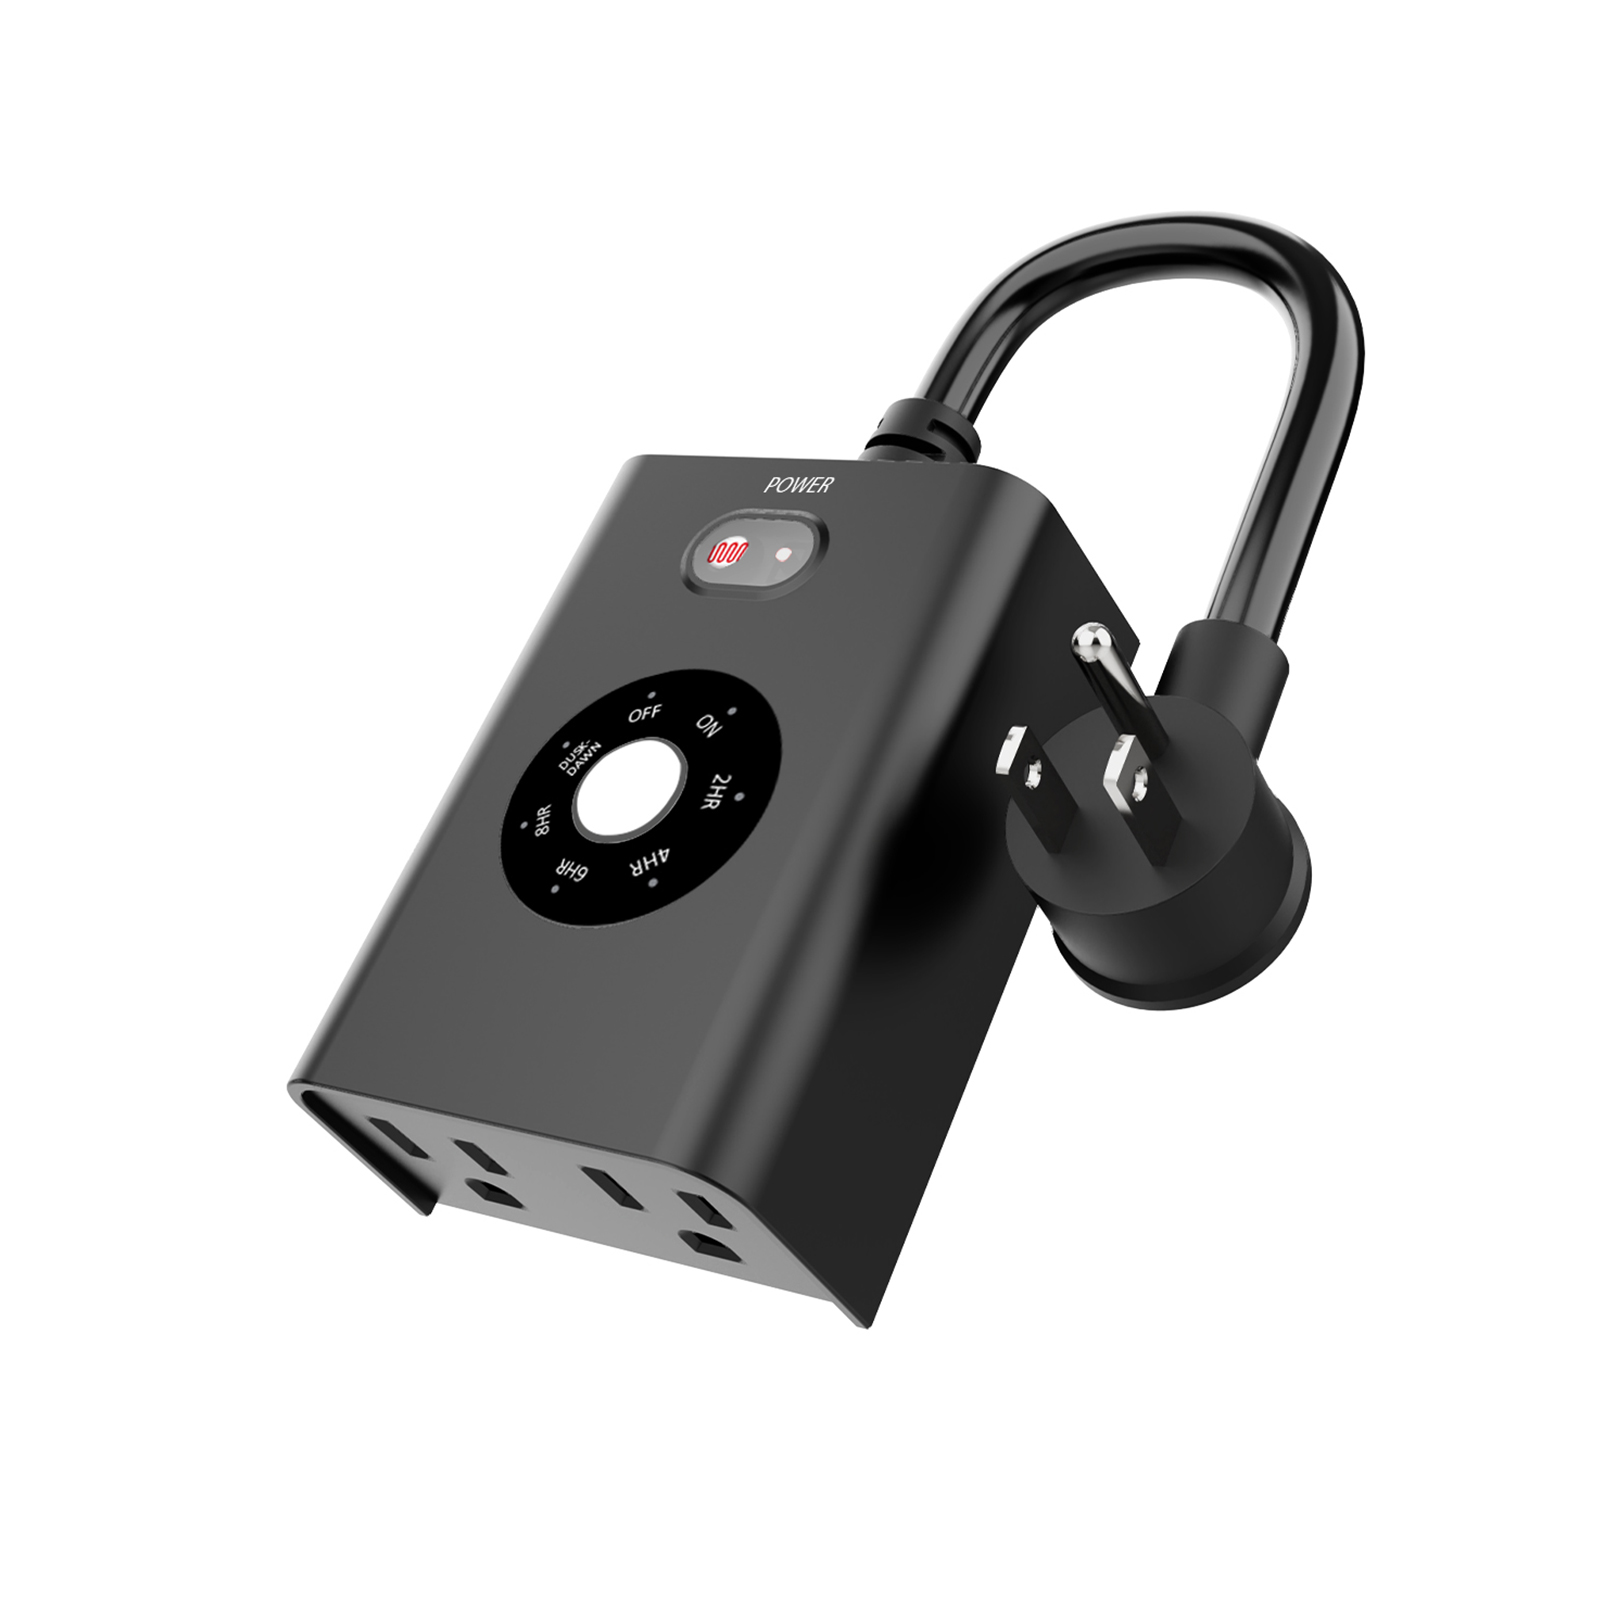 Minoston Z-Wave 700 Series Mini Smart Plug for Indoor (MP31Z)